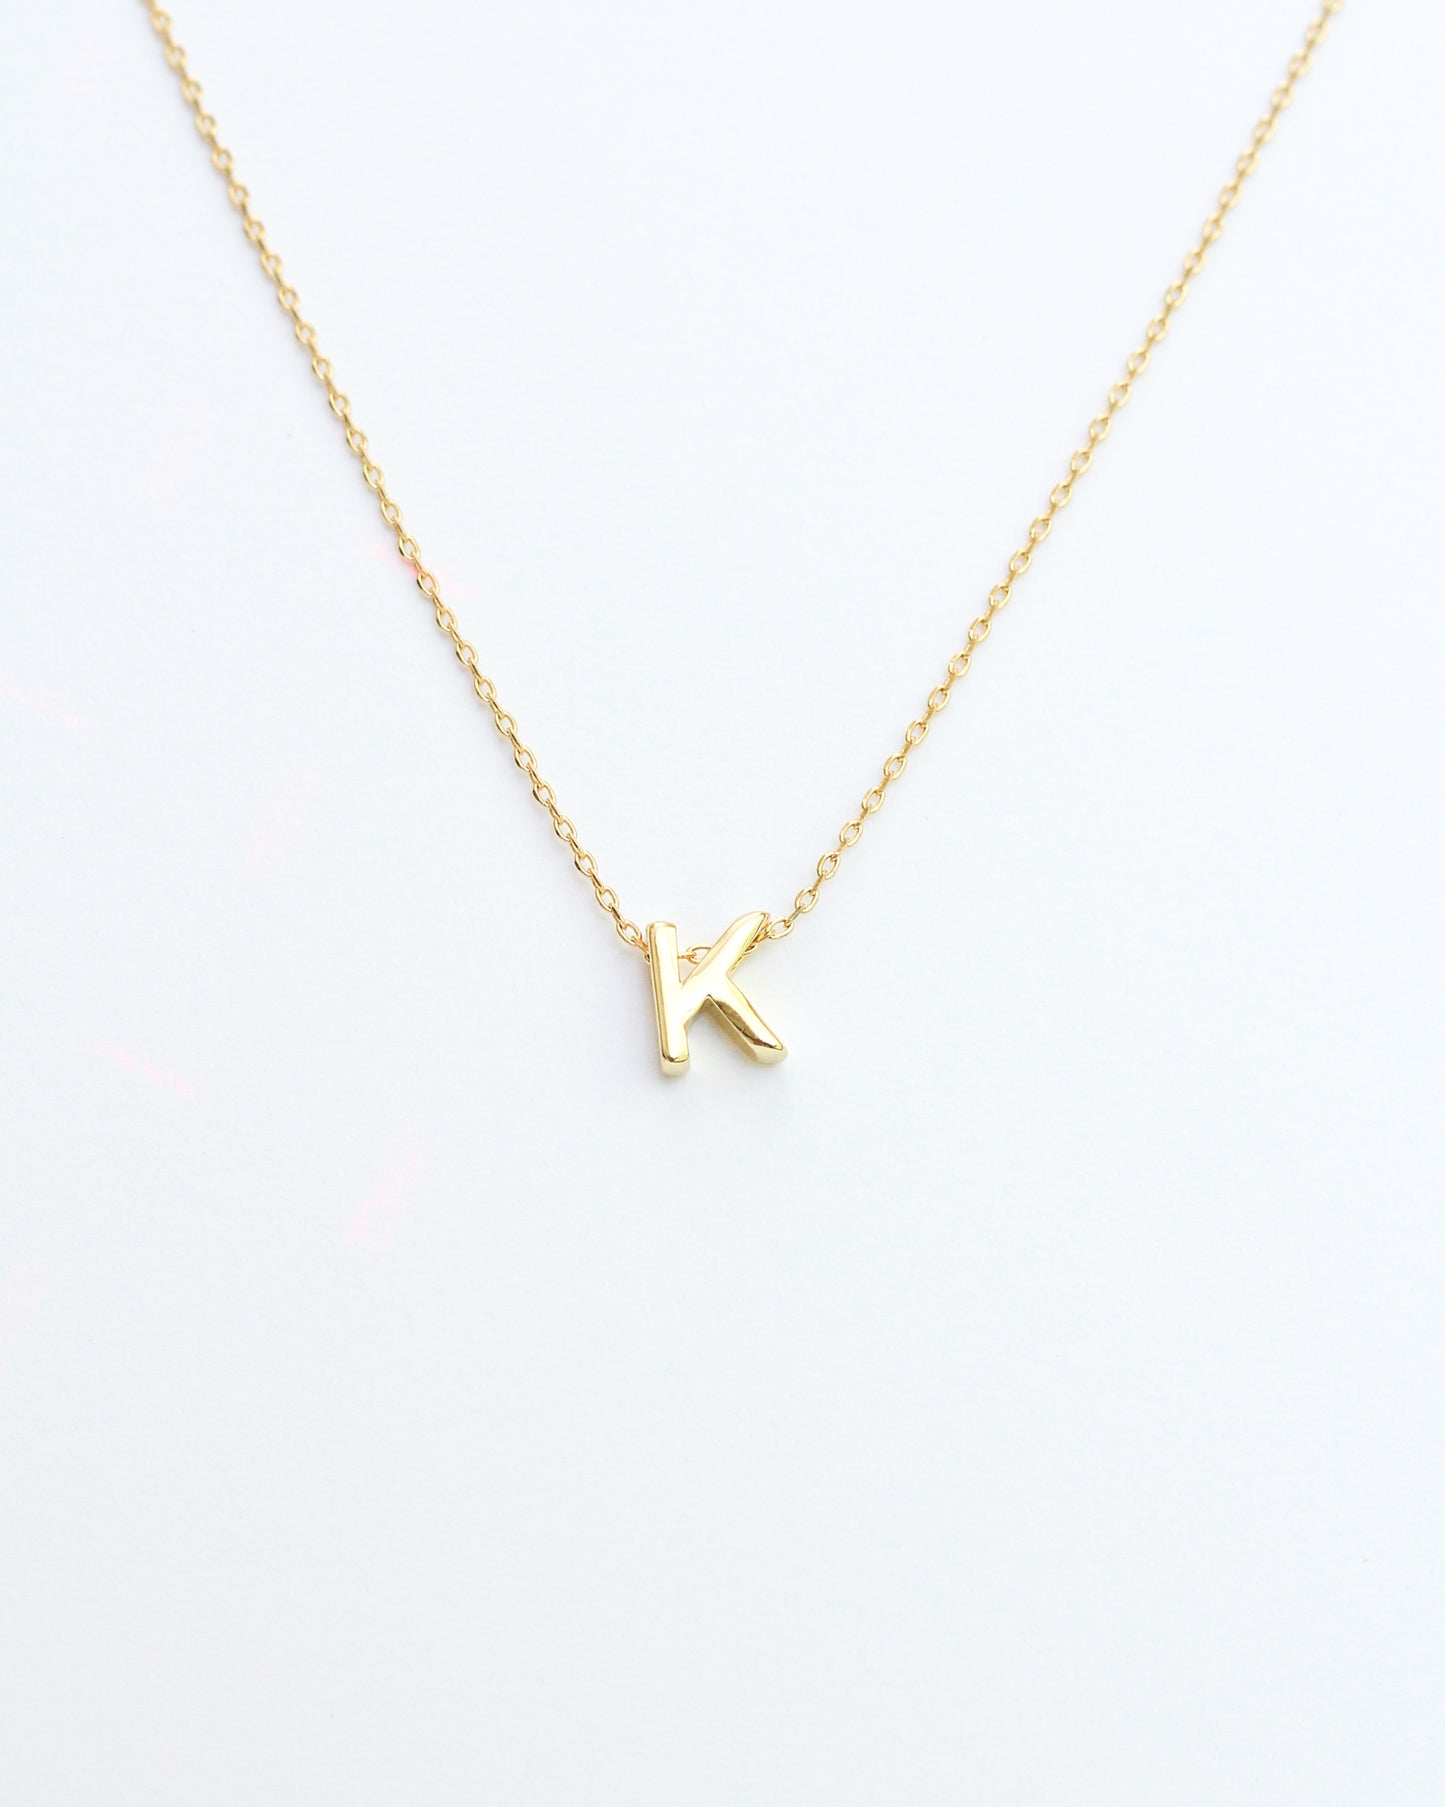 Gold Initial Letter Block Necklace. Letter K necklace